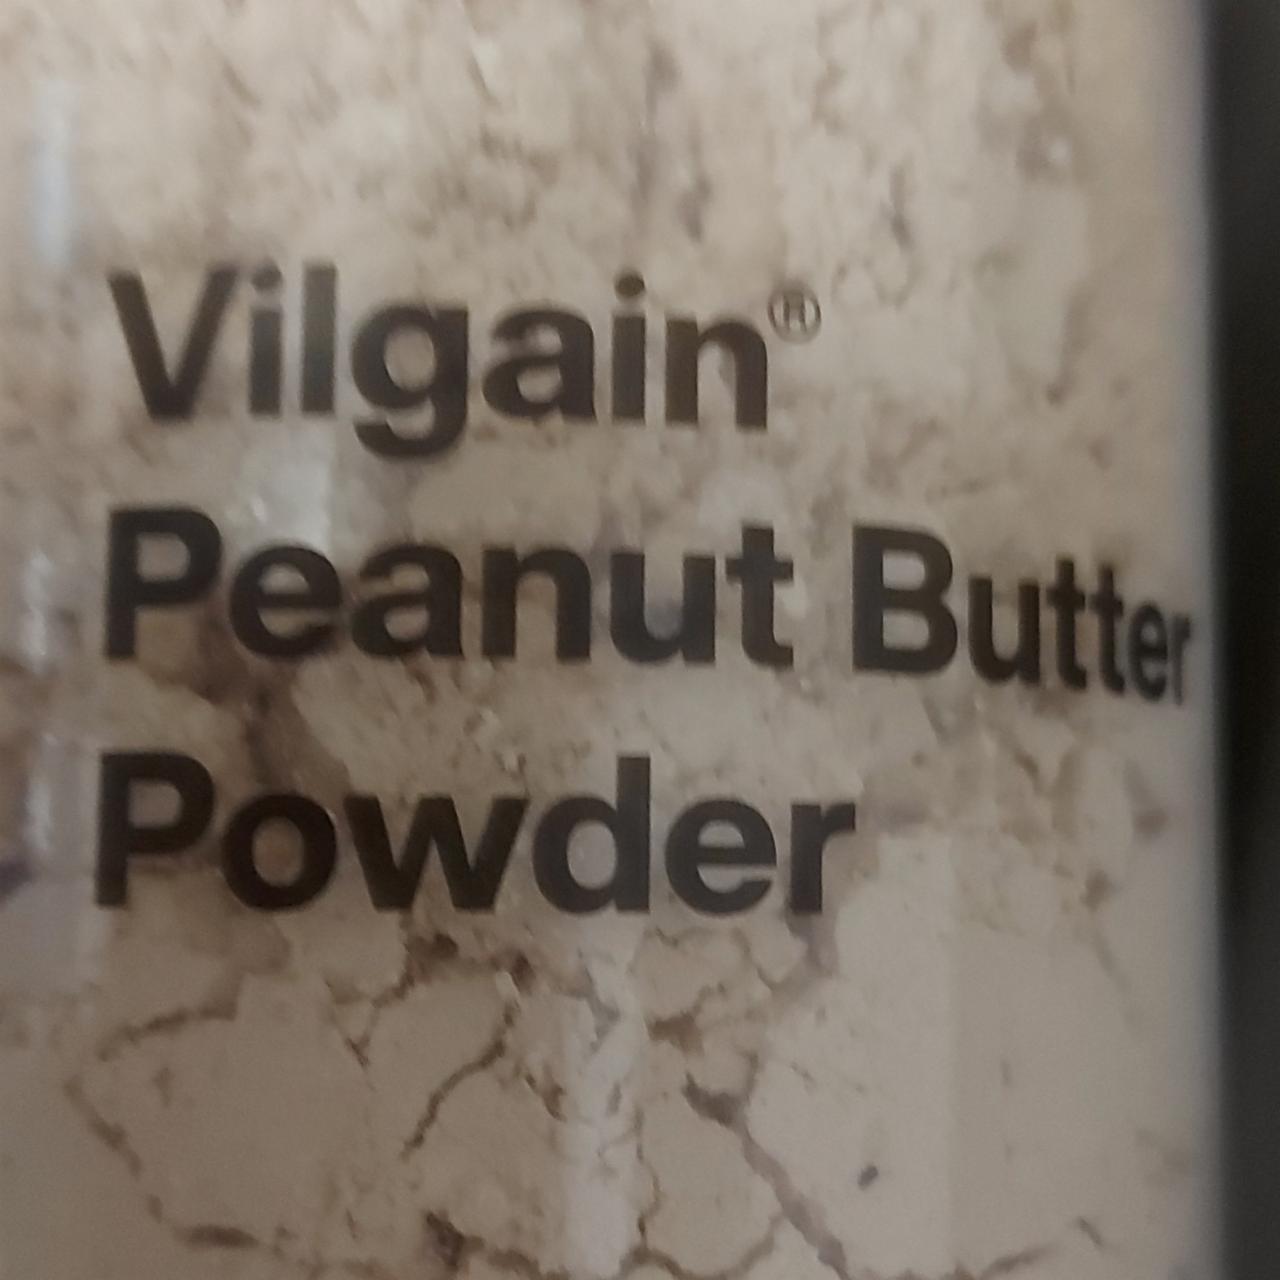 Fotografie - vilgain peanut butter powder